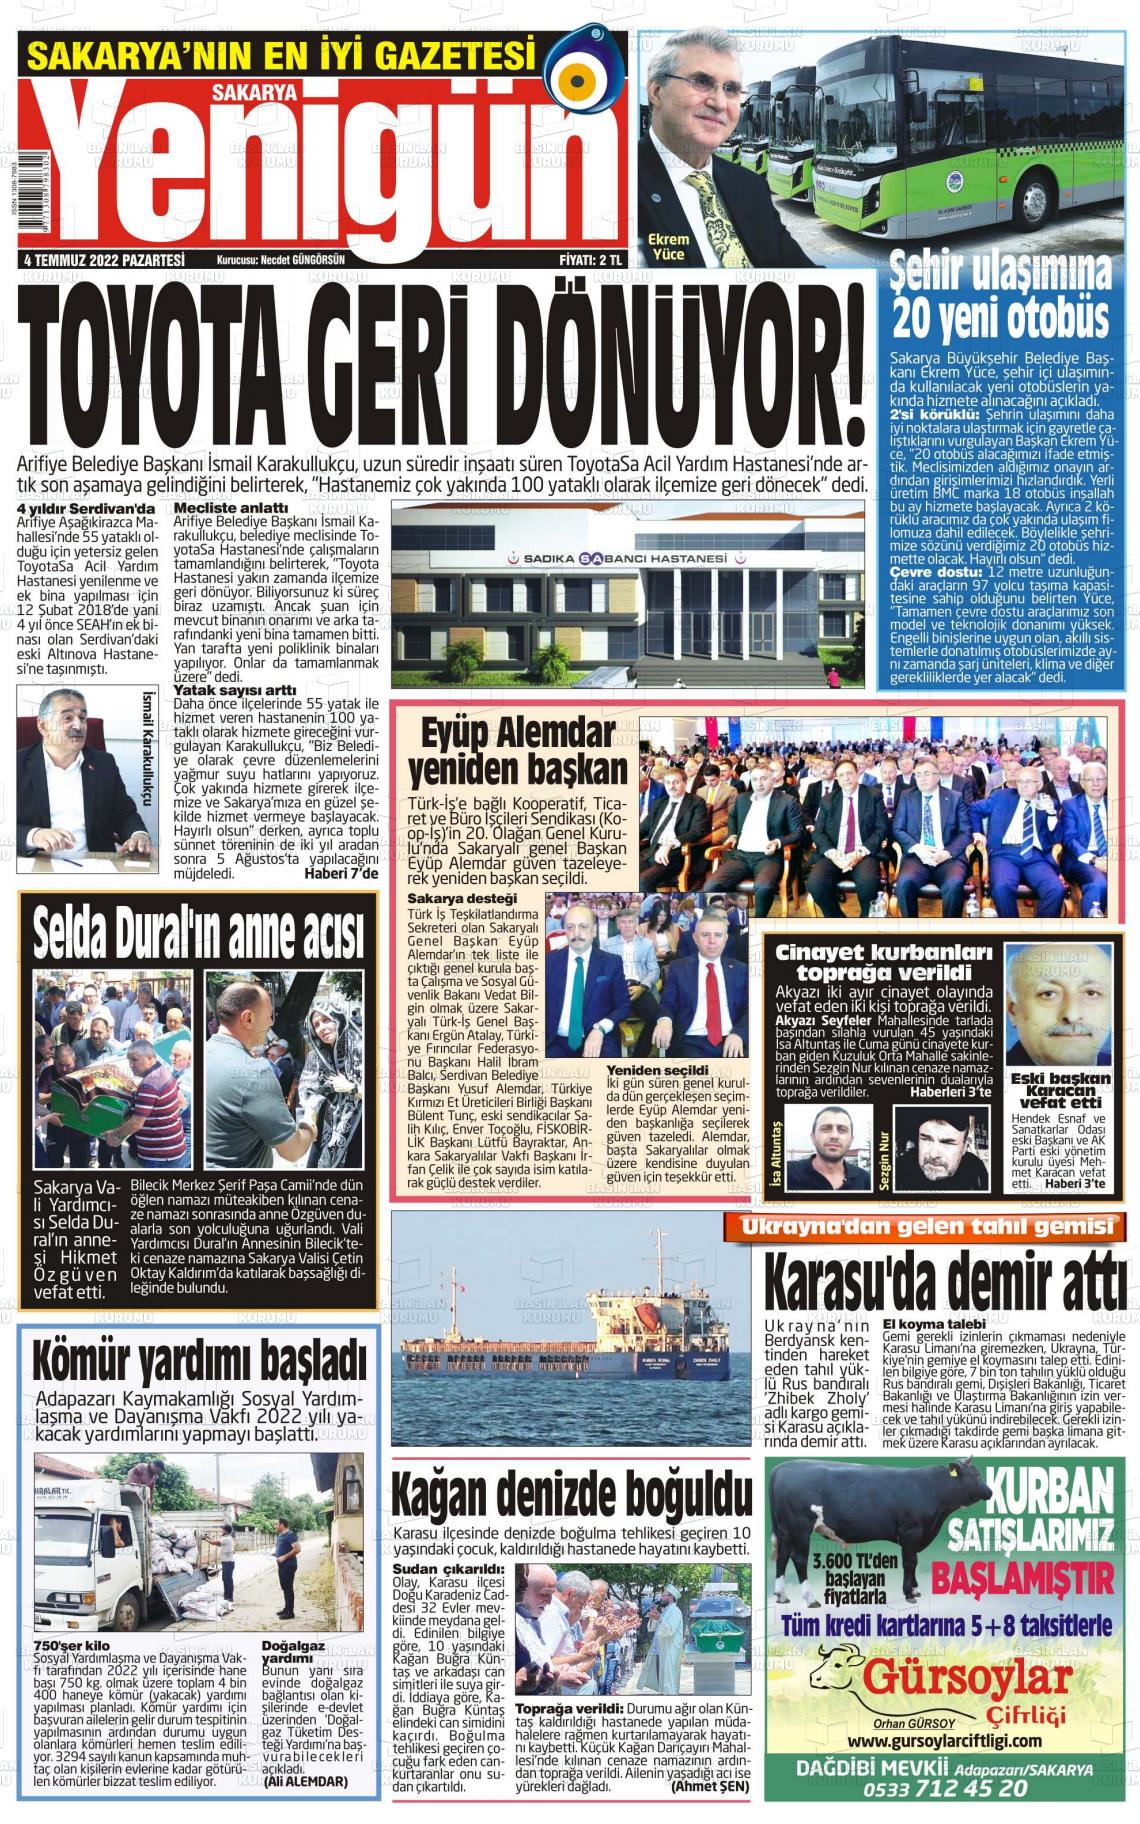 04 Temmuz 2022 Sakarya Yenigün Gazete Manşeti